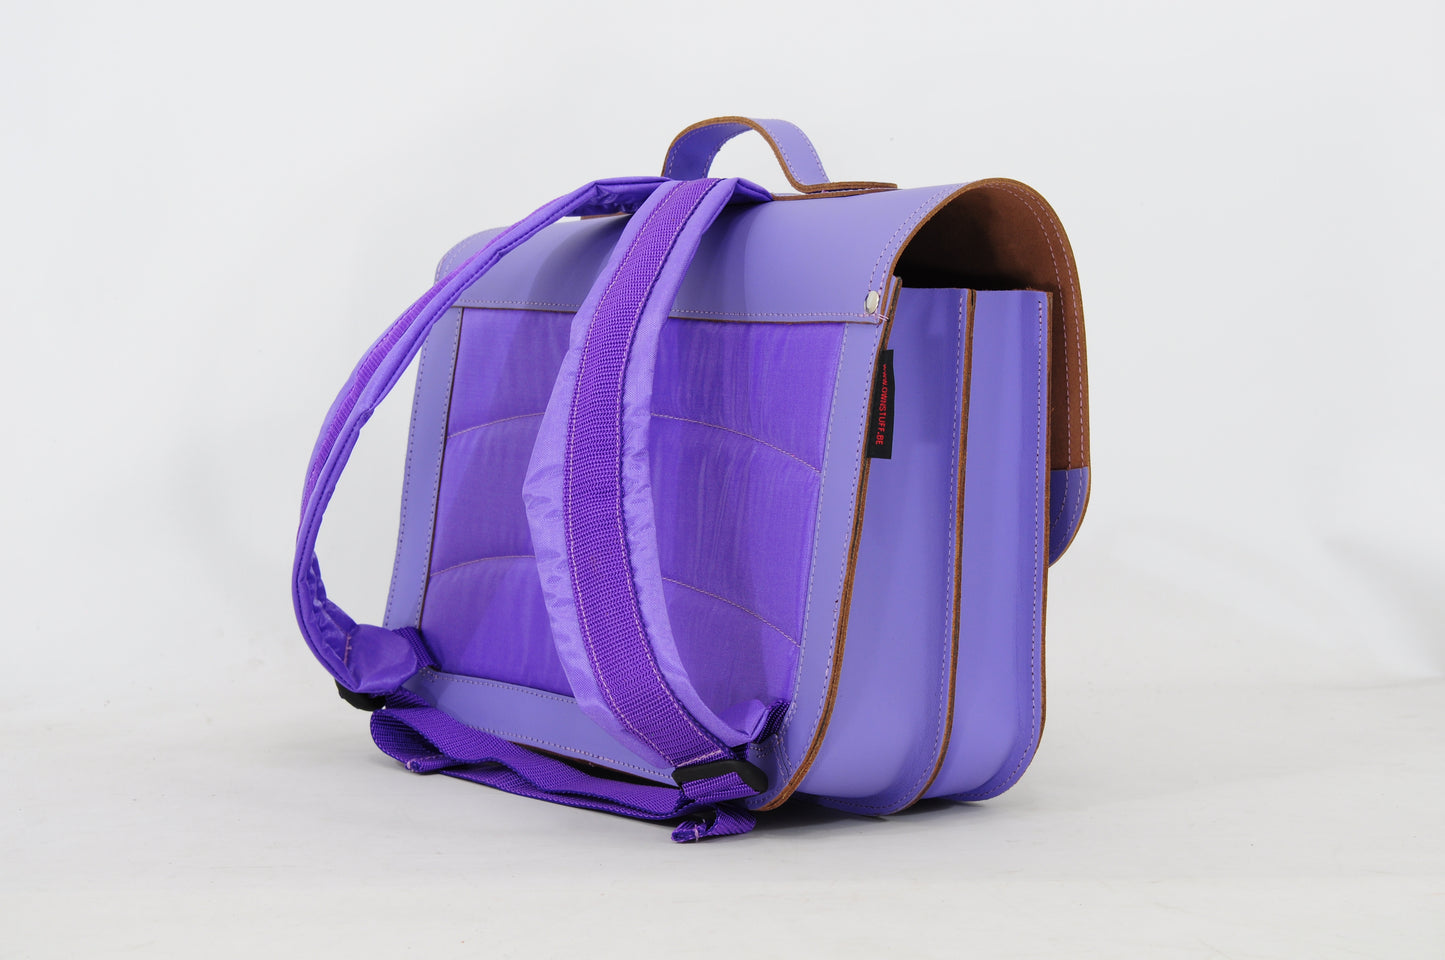 Own Stuff Leather Bookbag Hearts - Lilac - Primary school